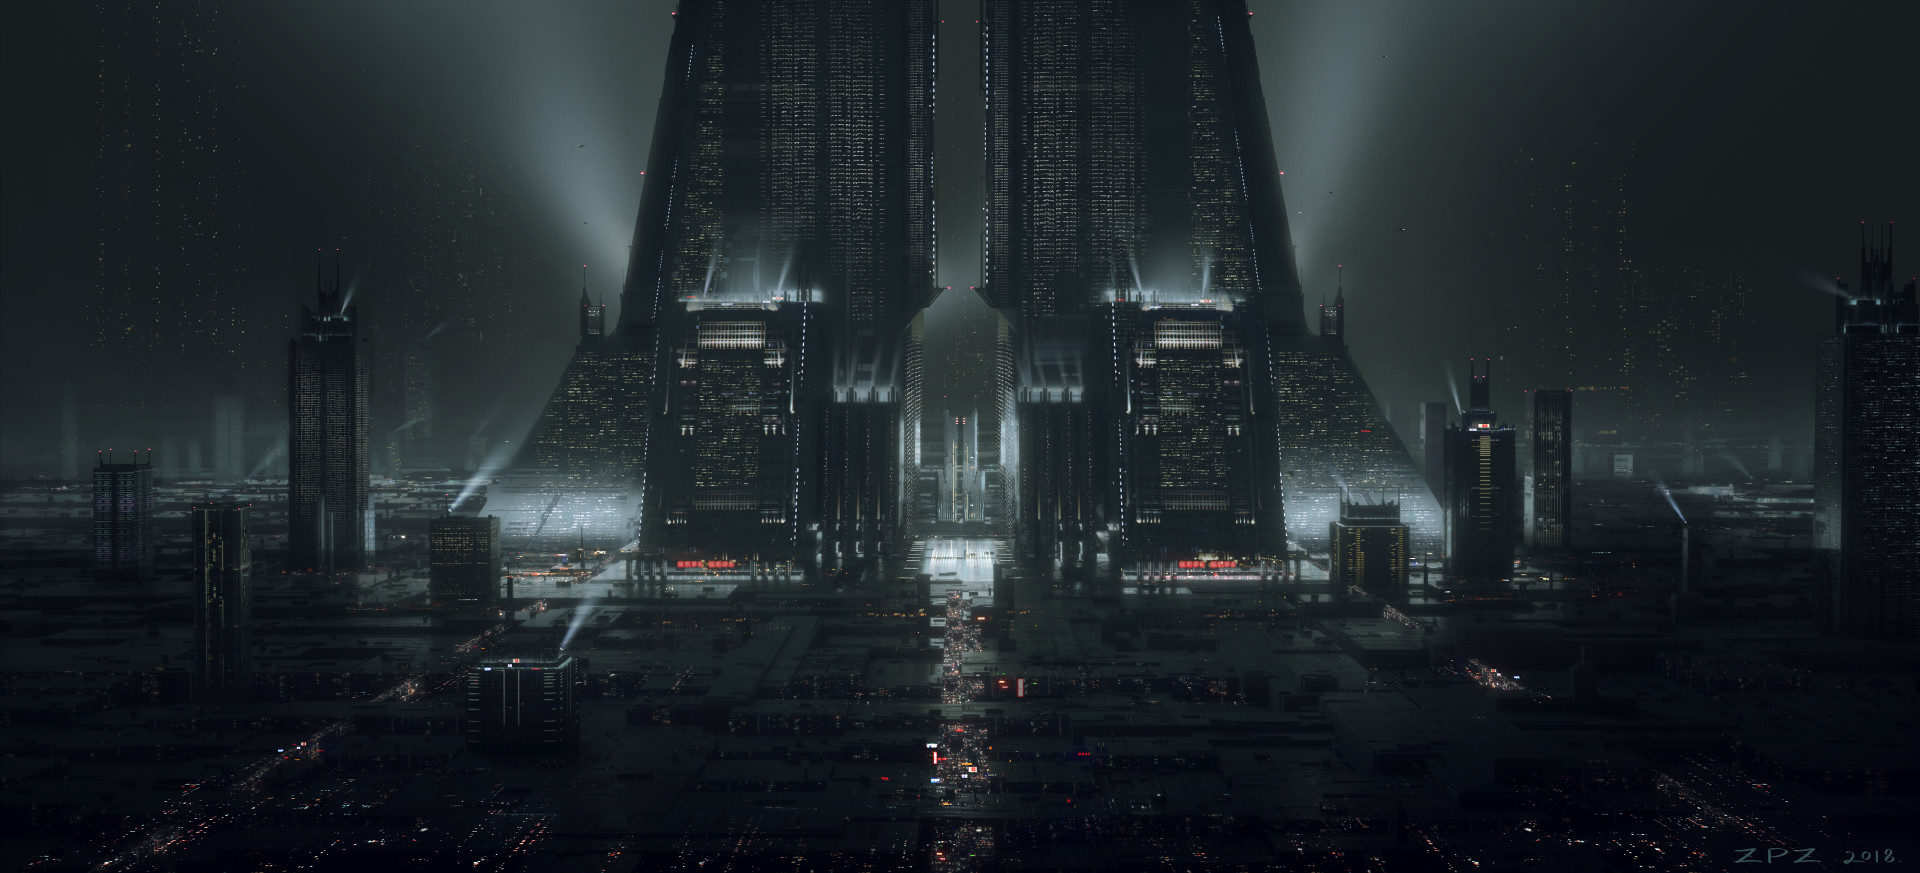 General 1920x873 digital art landscape Pengzhen Zhang cyberpunk fantasy city fantasy architecture Blade Runner